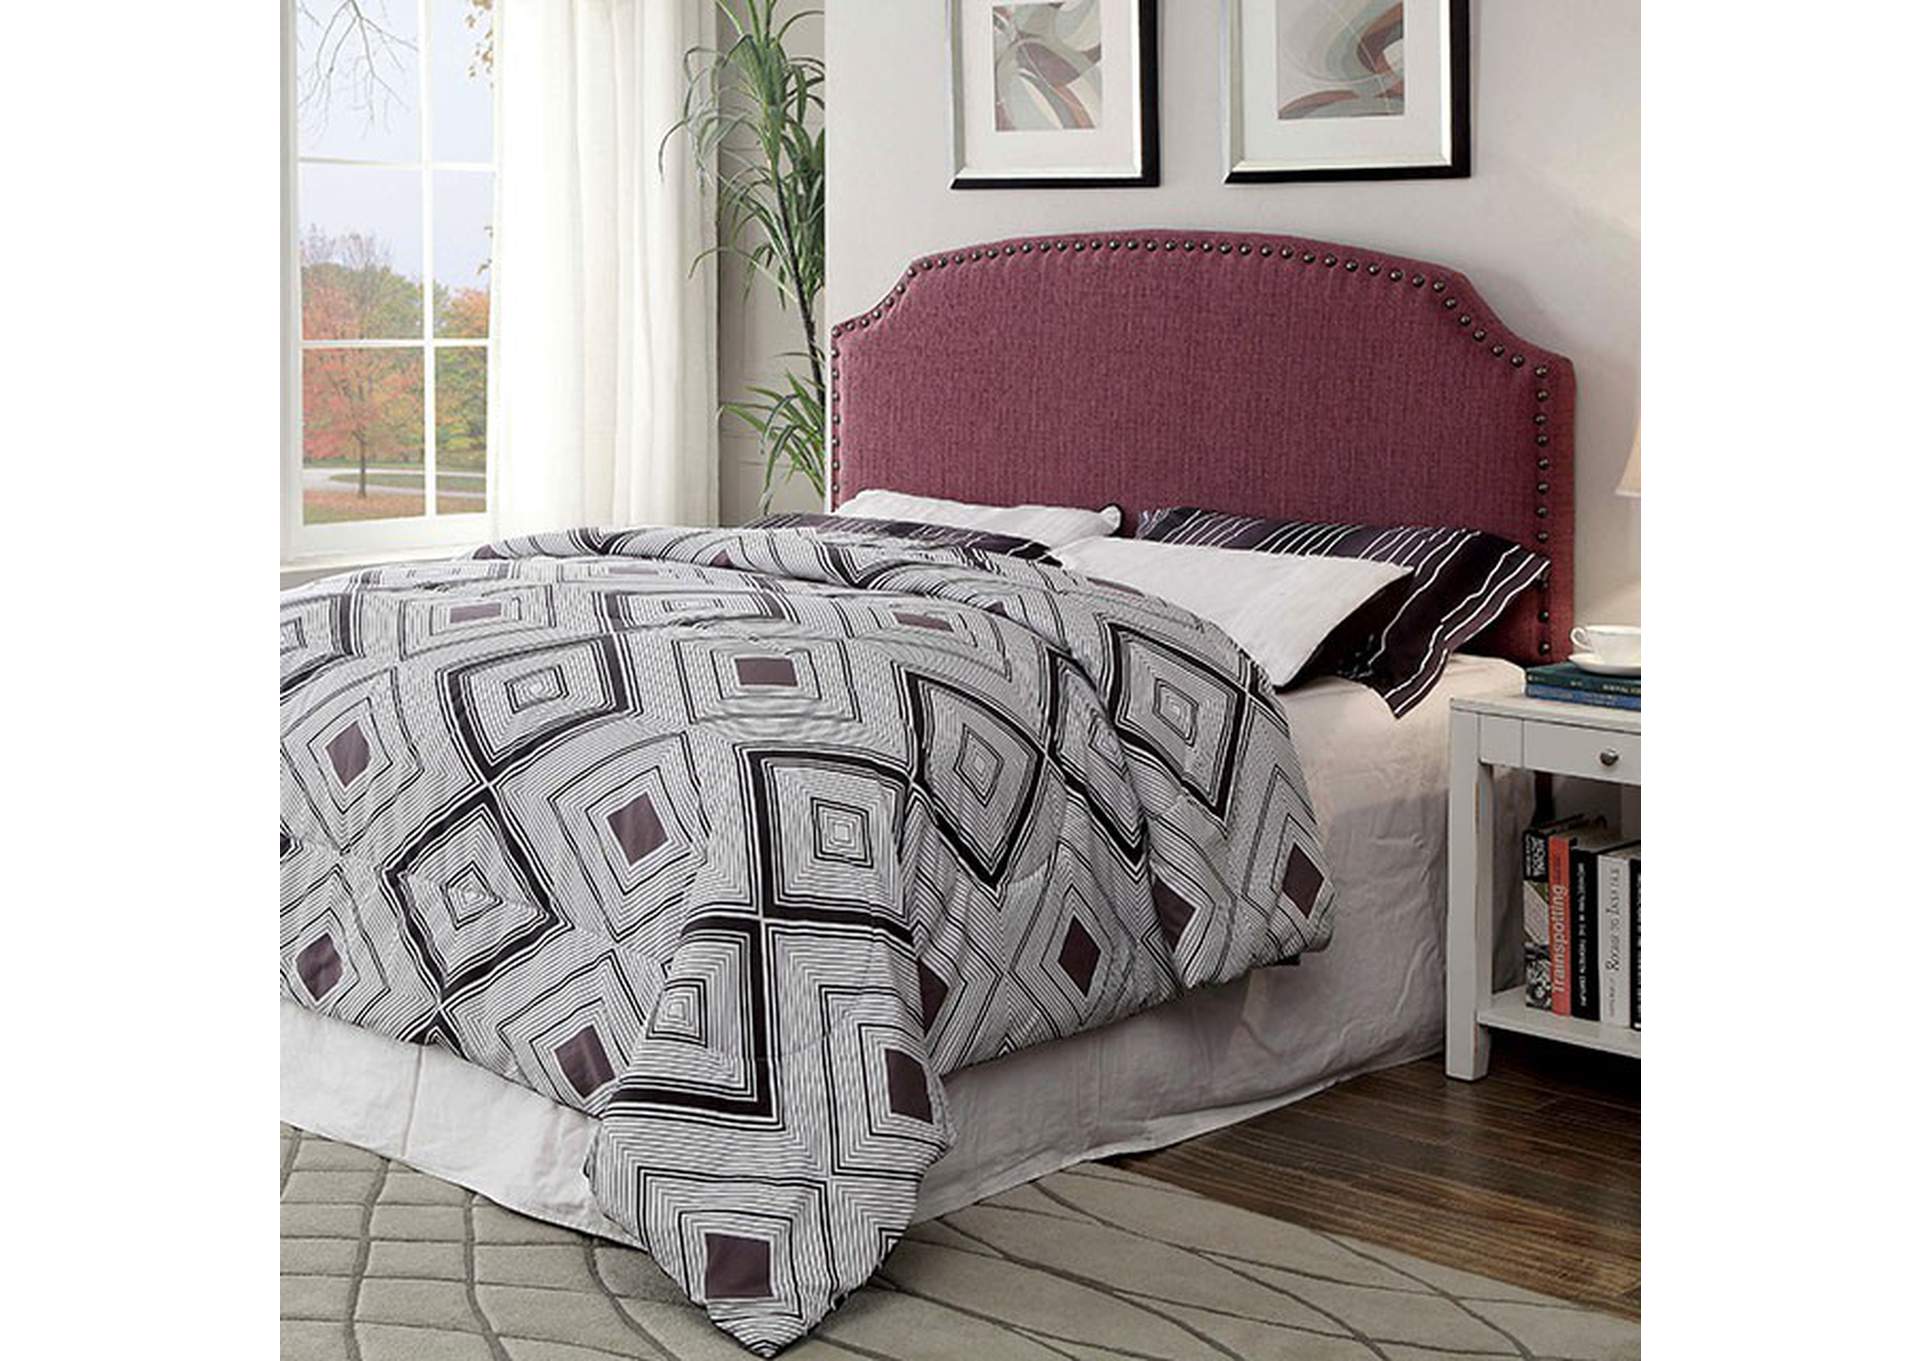 Hasselt Purple King Upholstered Headboard Sweet Home Furniture By Niposul